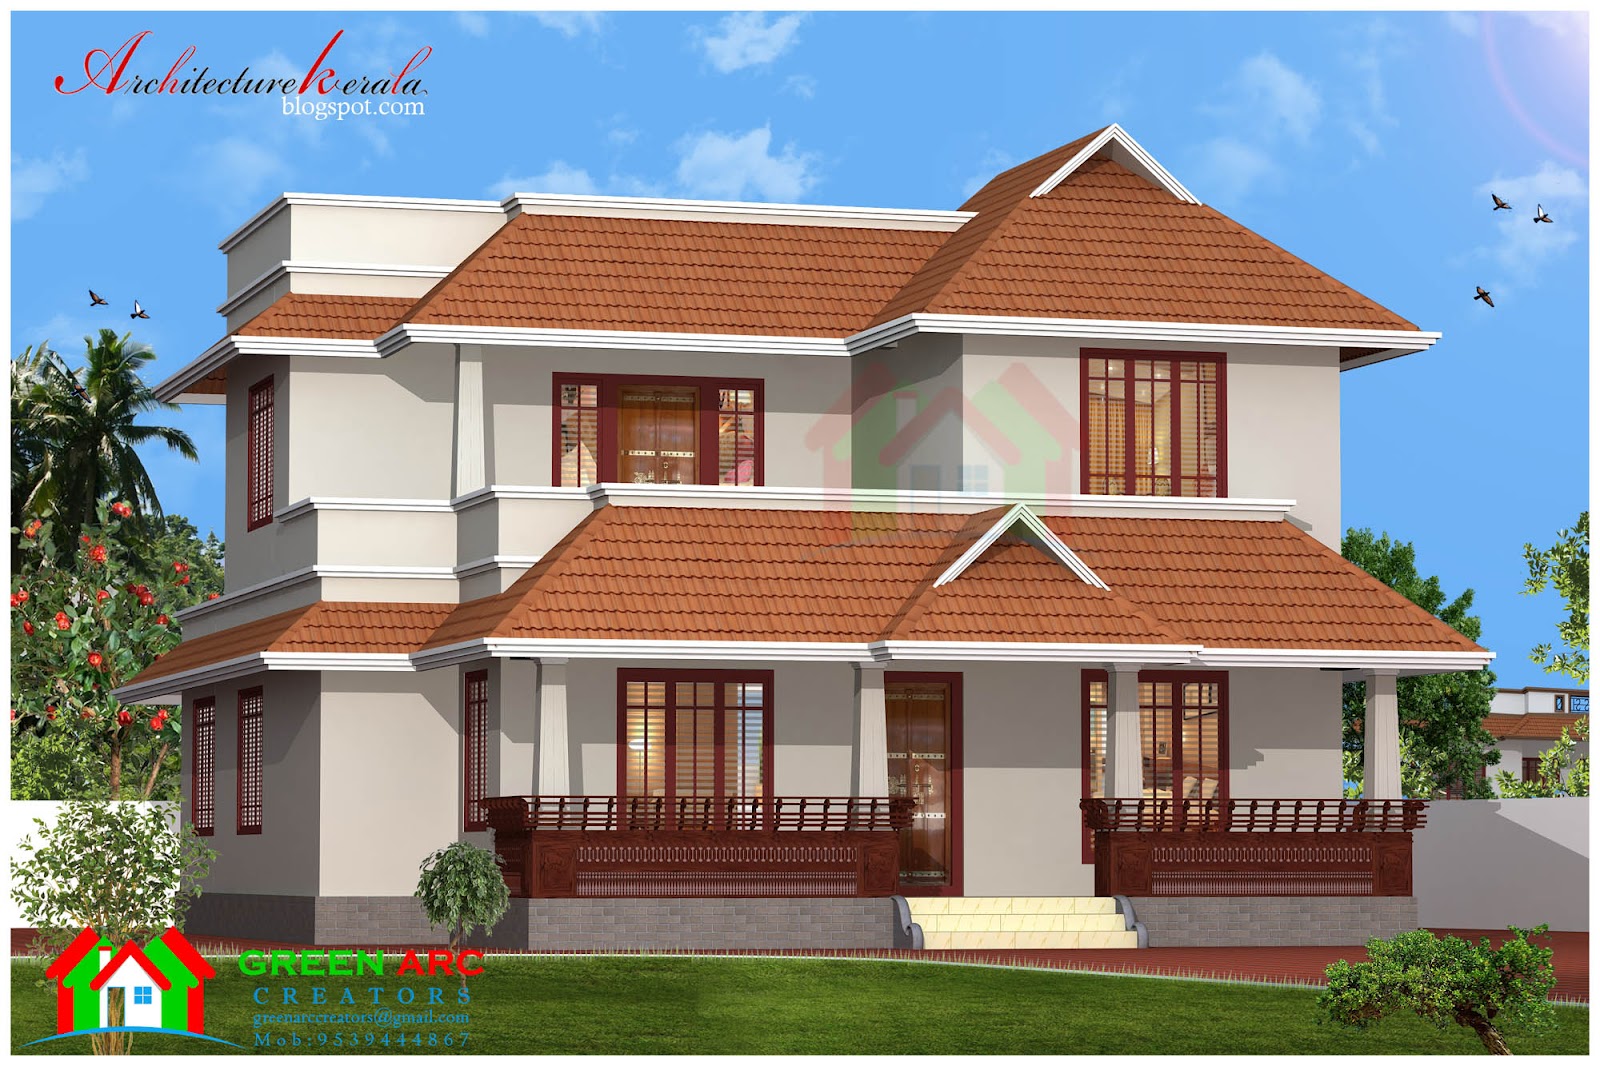 2 8 Acres Of Land With Big Traditional Kerala Style House For Sale At Kulakkad Cherpulassery Palakka Kerala Real Estate